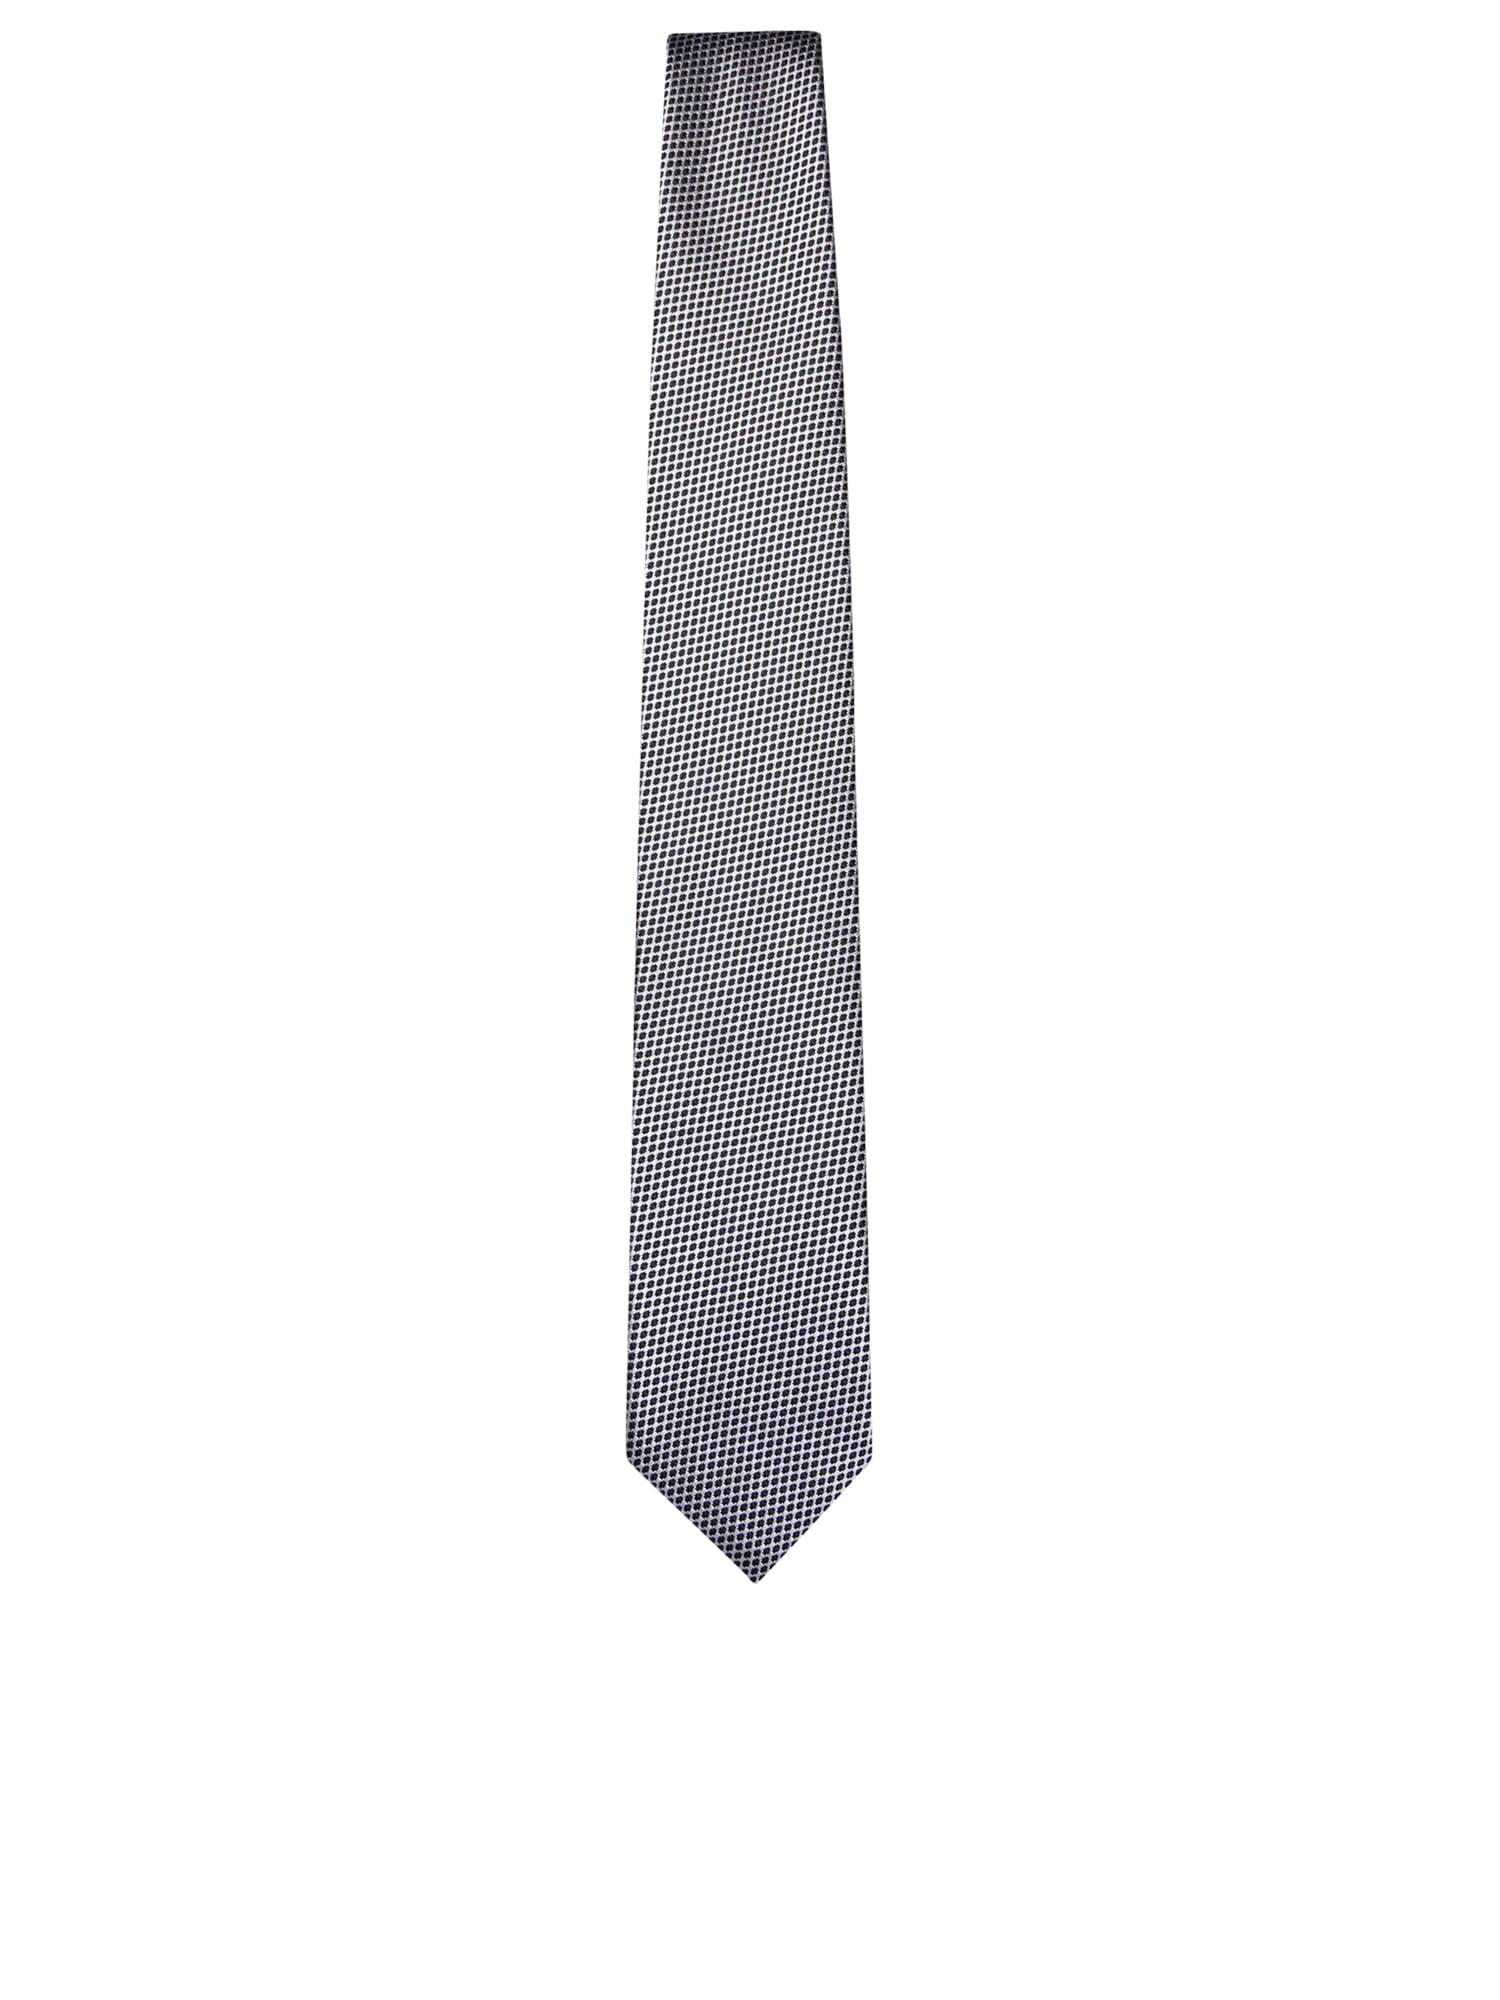 Micro-pattern Silver Tie